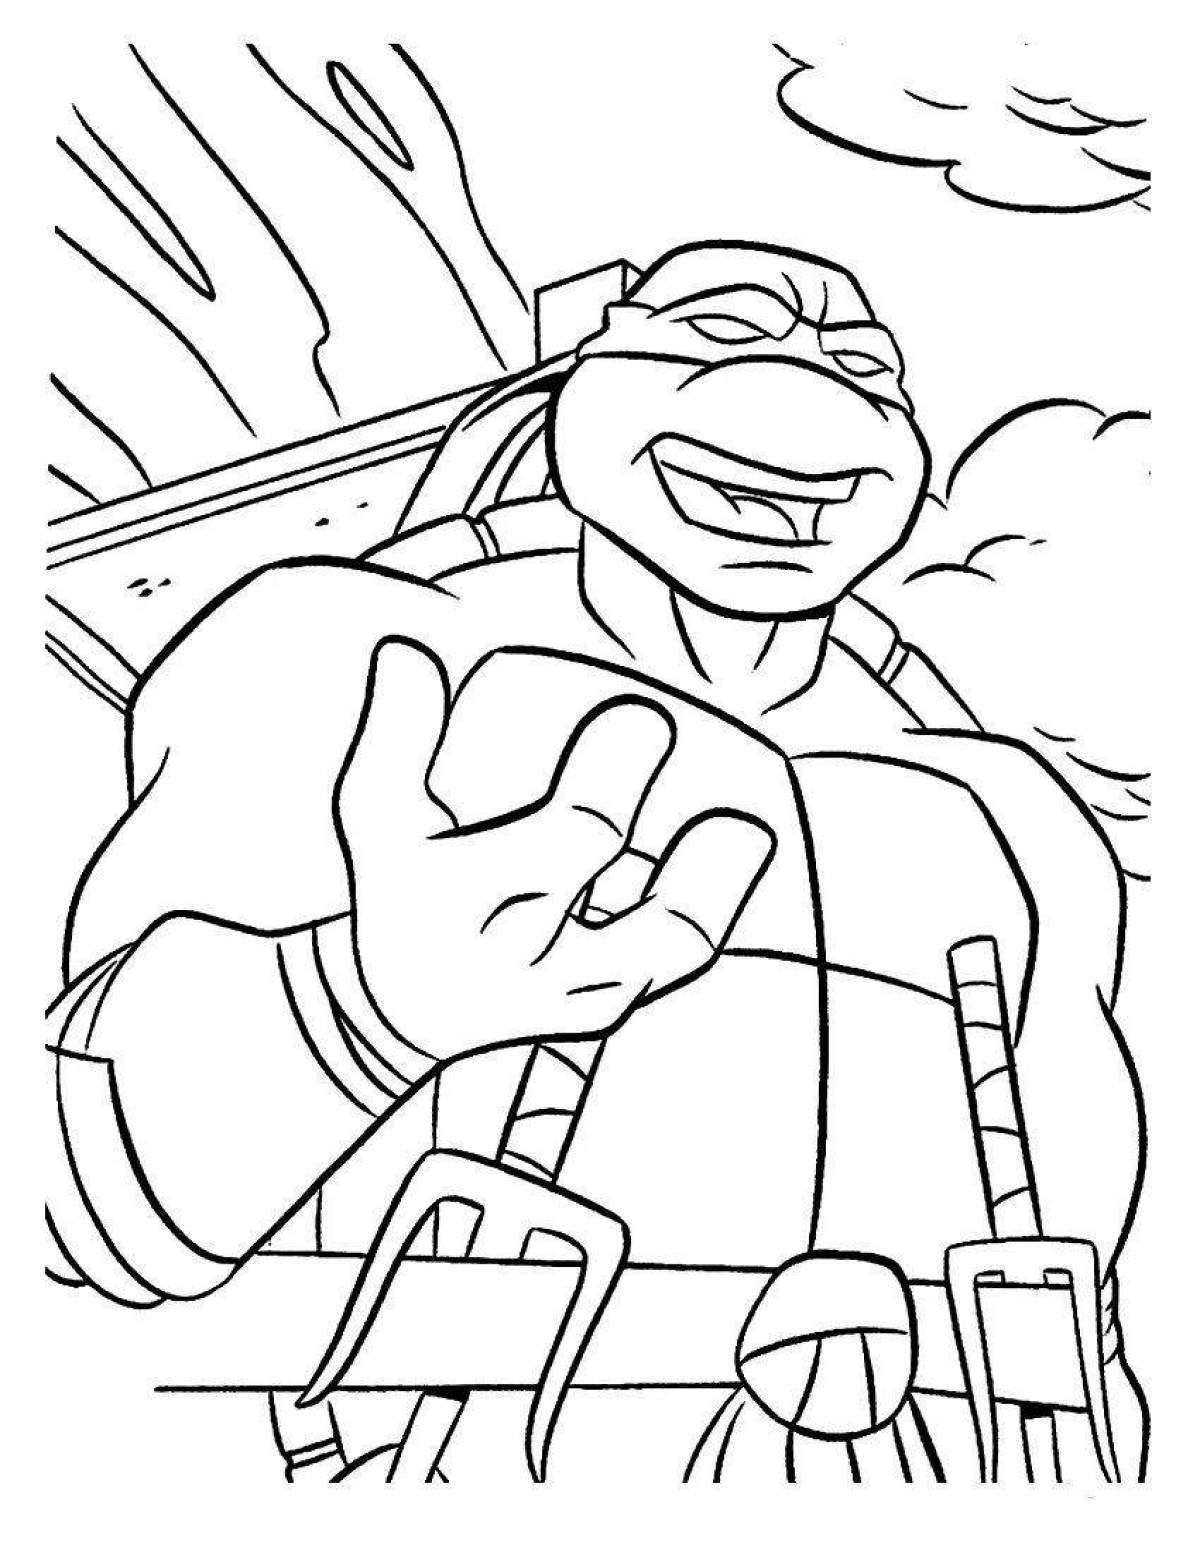 Raphael's exciting coloring pages of Teenage Mutant Ninja Turtles